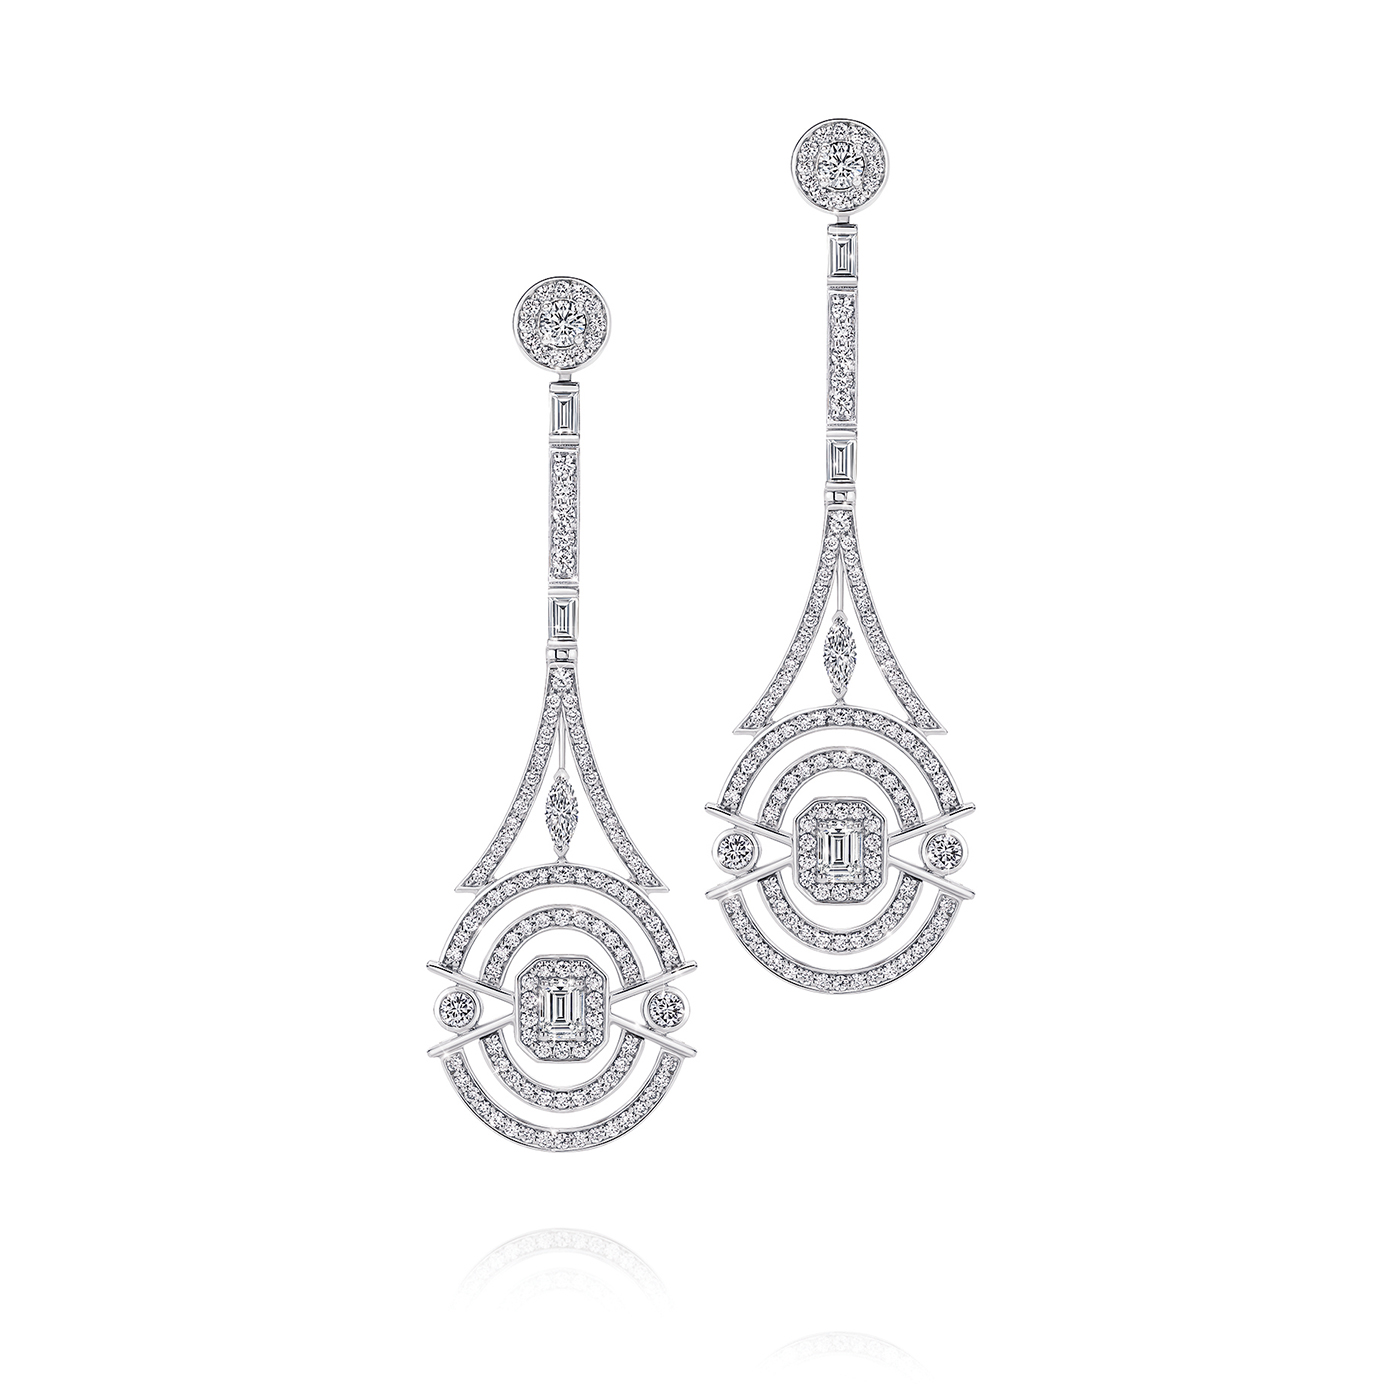 Art Deco Style Diamond Earrings In 14K White Gold